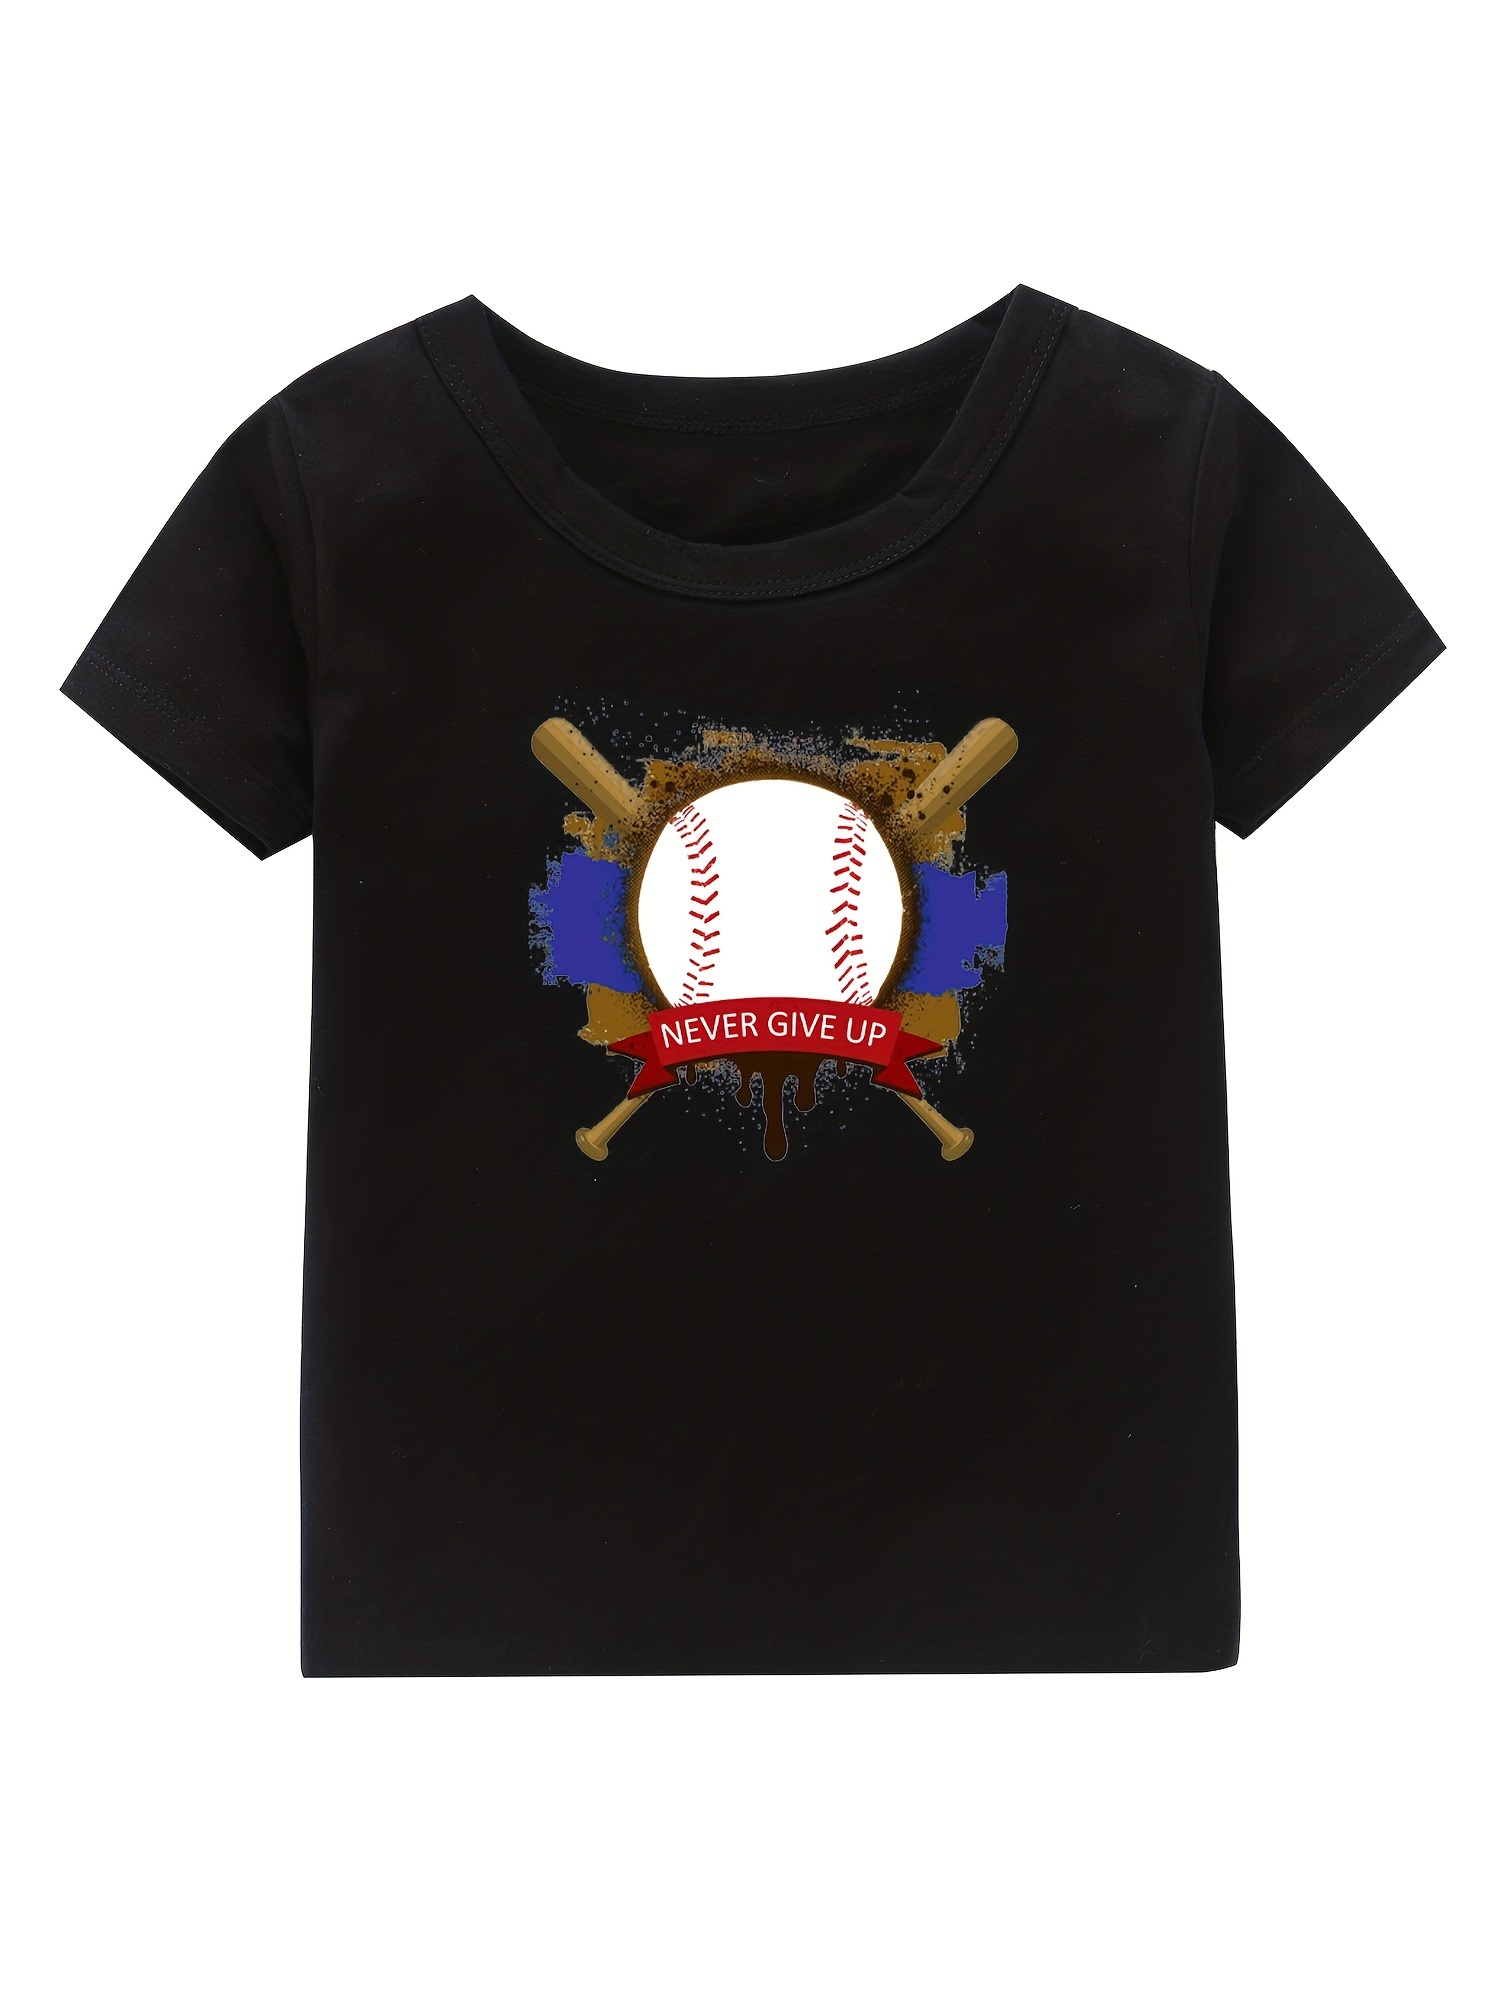 Boys Short Sleeve Baseball Graphic Tee